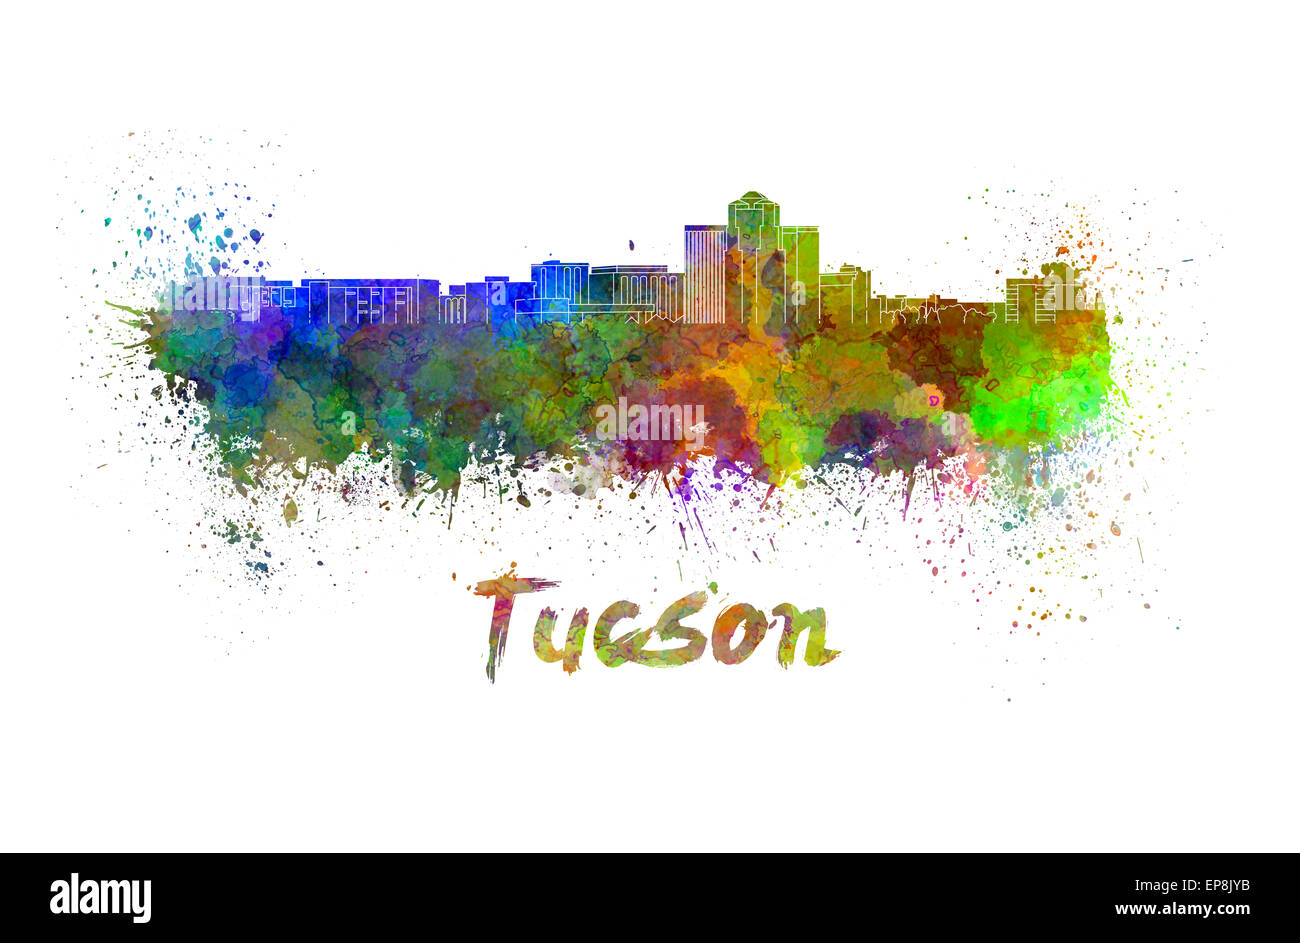 Tucson skyline in watercolor splatters Stock Photo